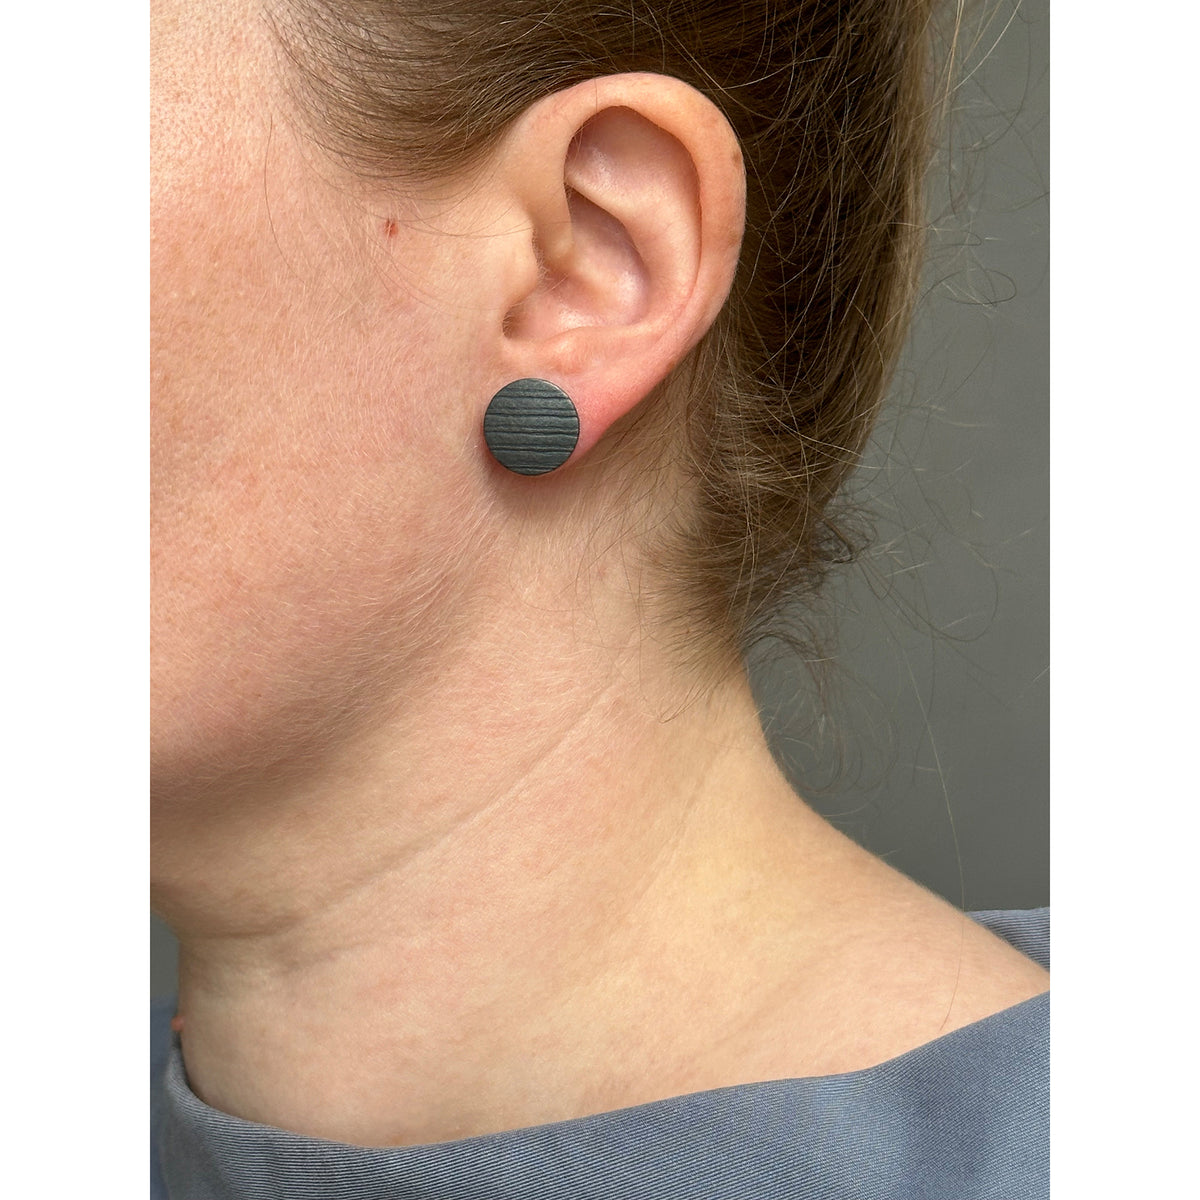 Colourful reversible stud earrings - oxidised